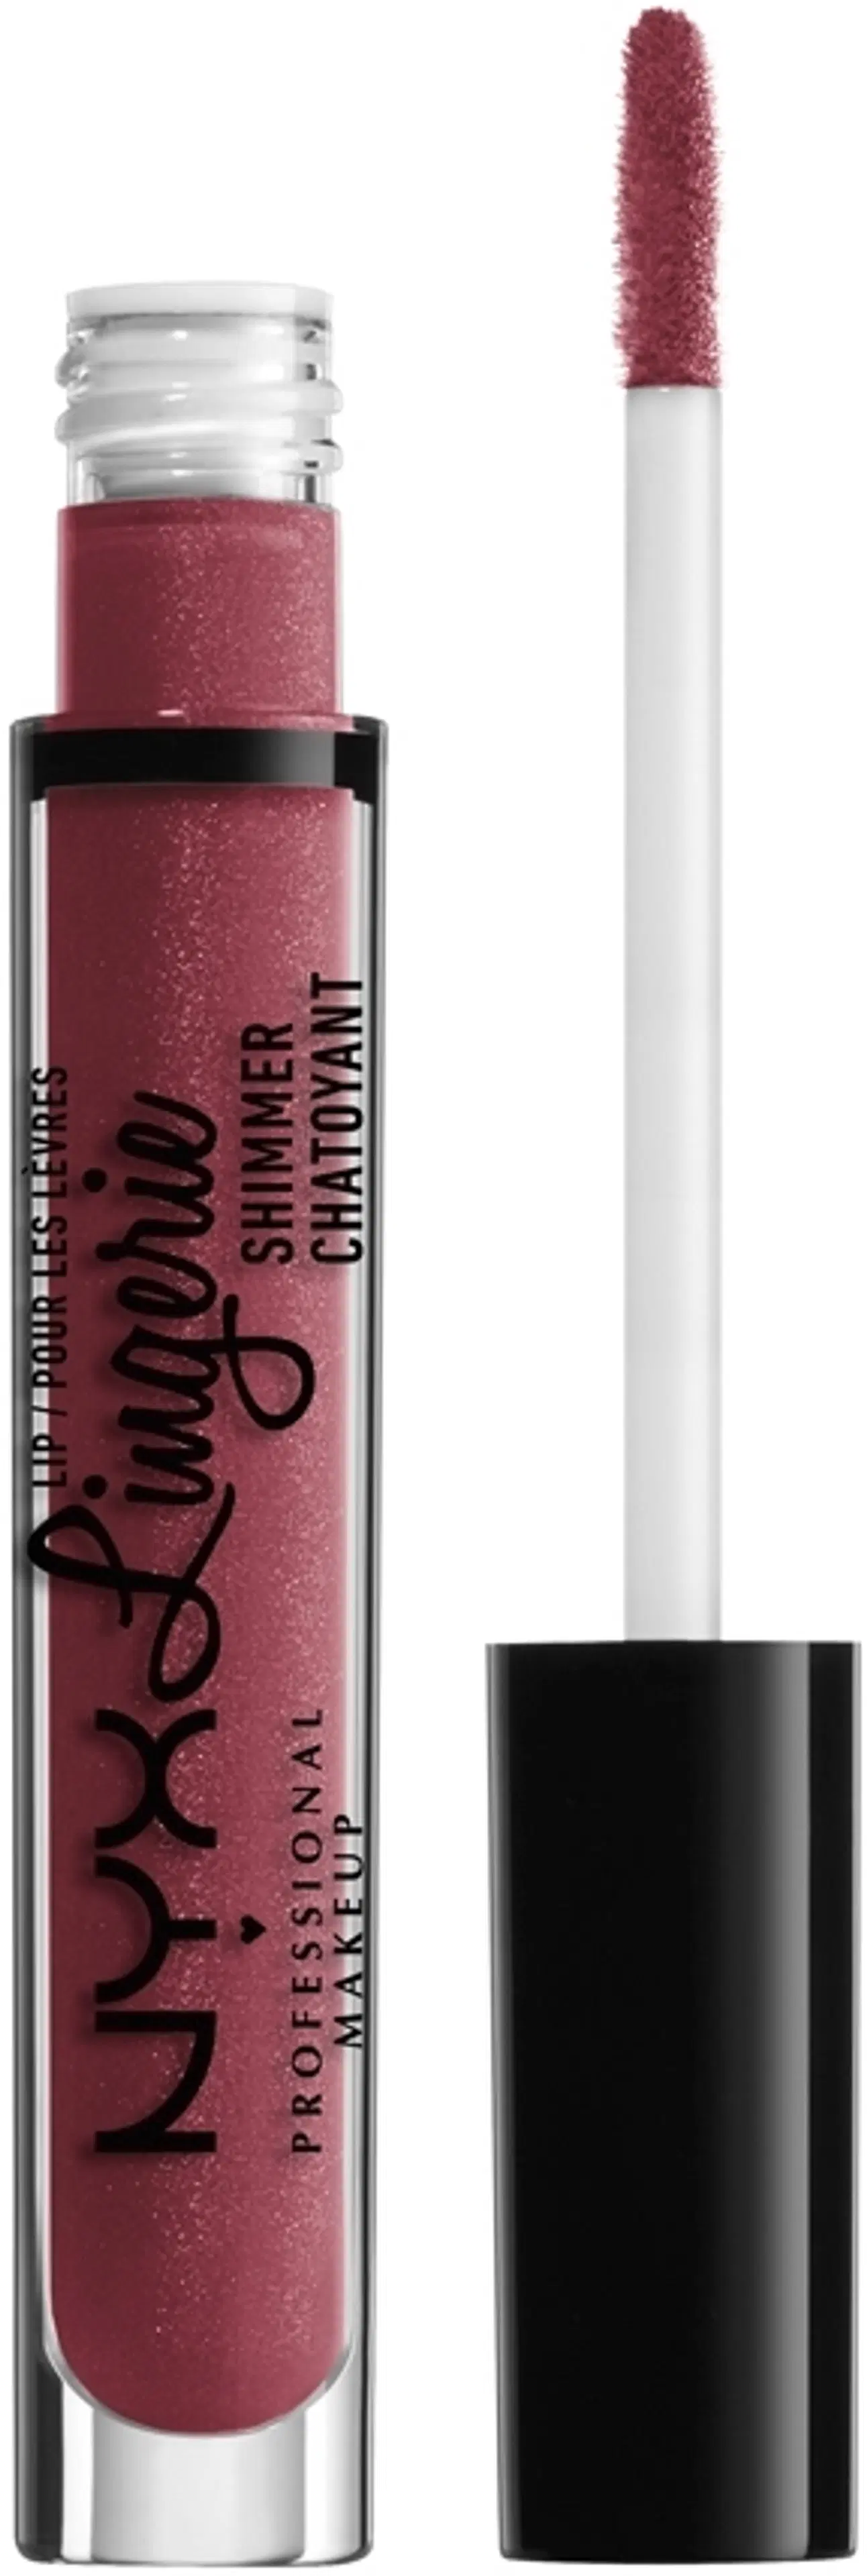 NYX Professional Makeup Lip Lingerie Shimmer huulikiilto 3,4ml